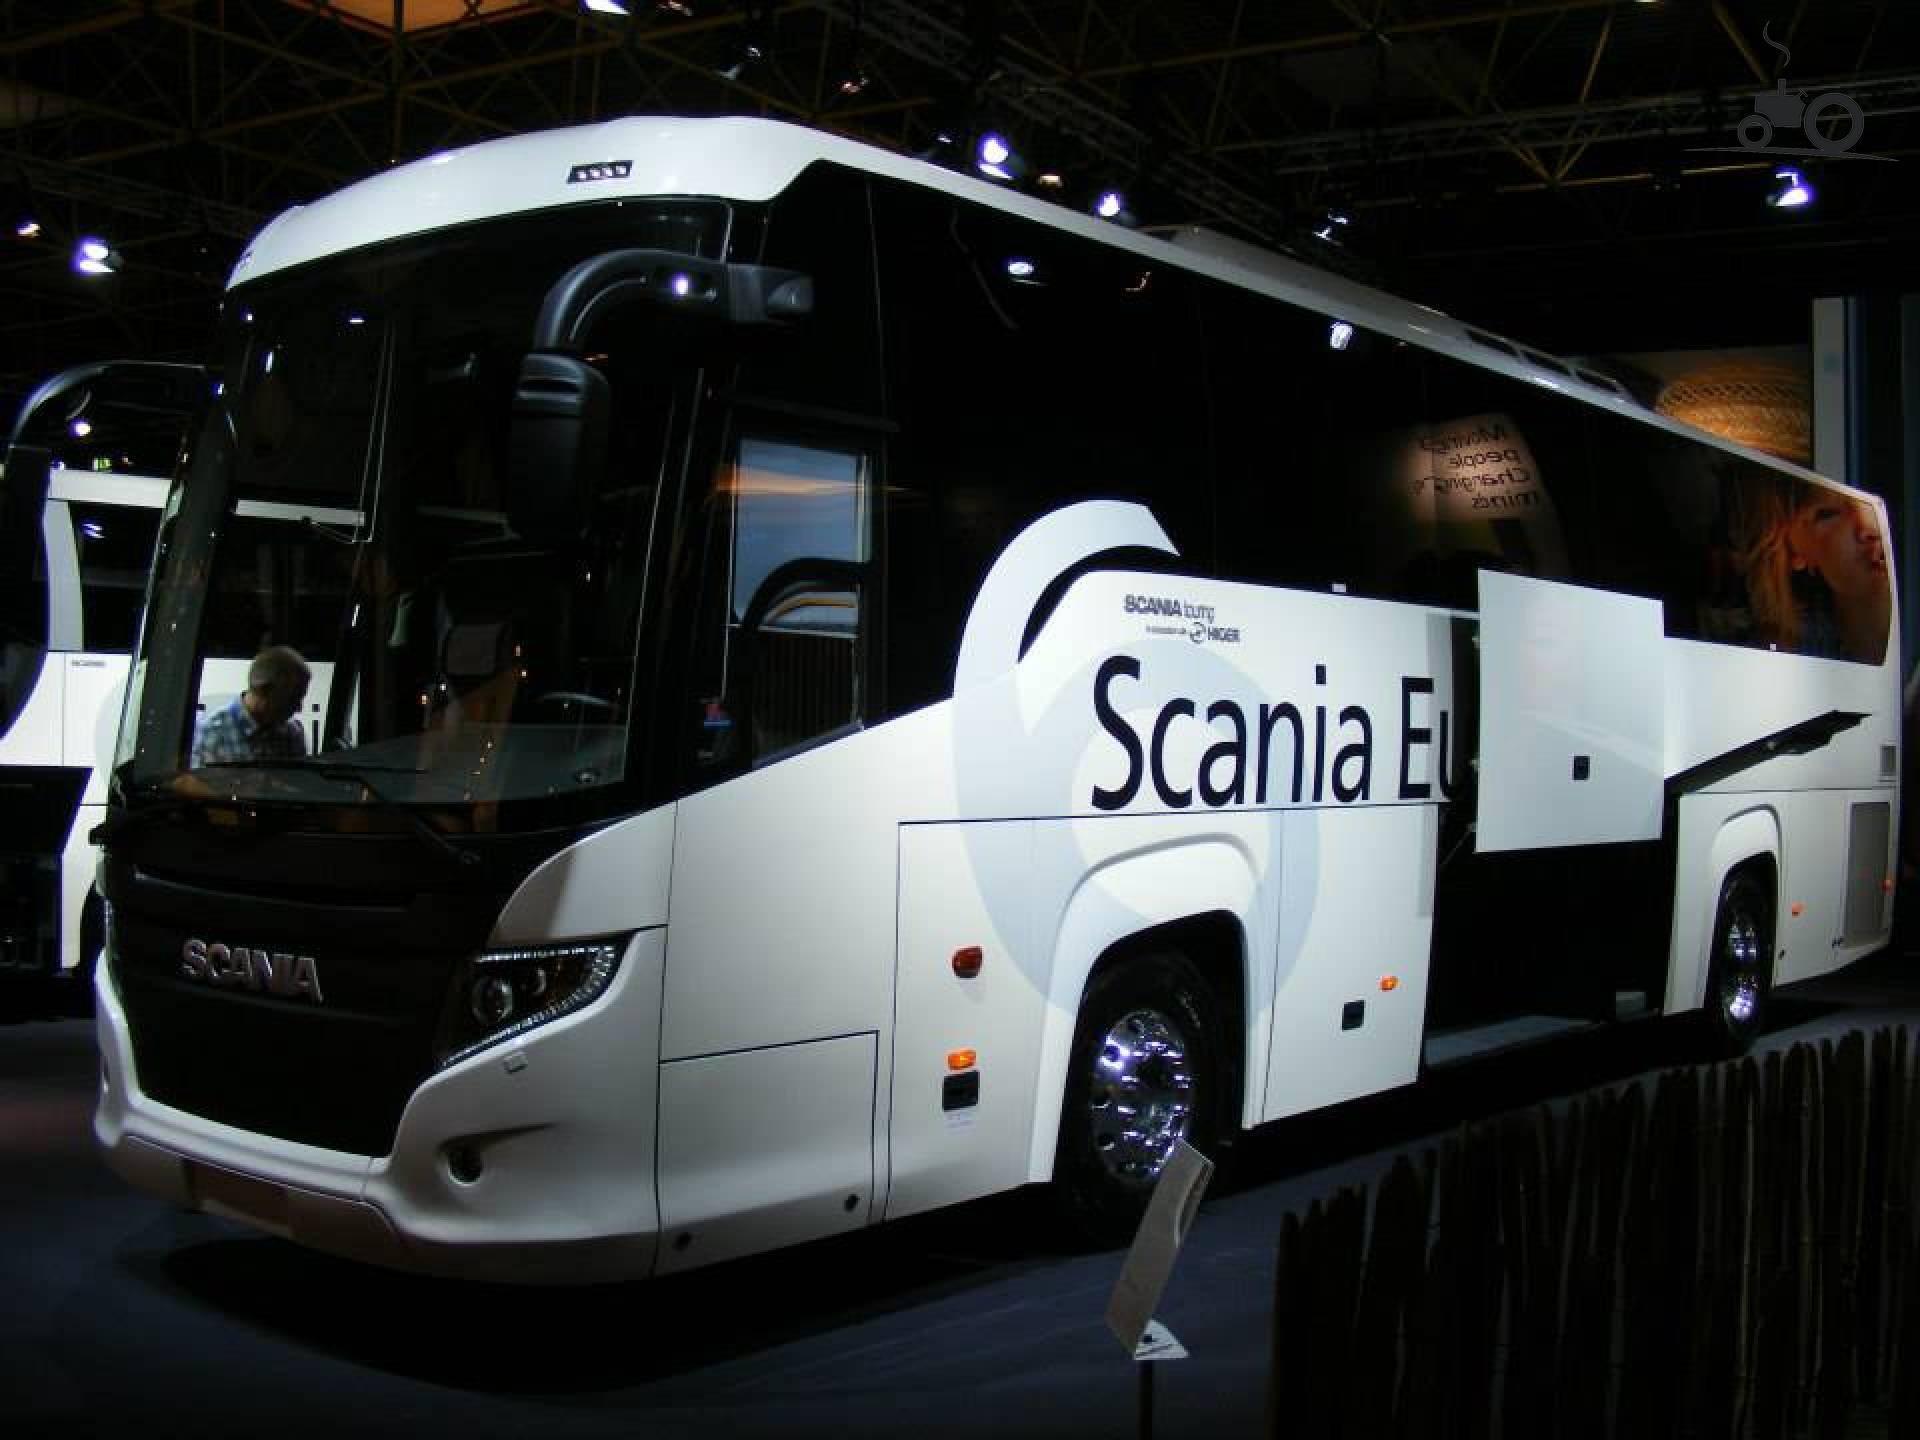 Scania touring